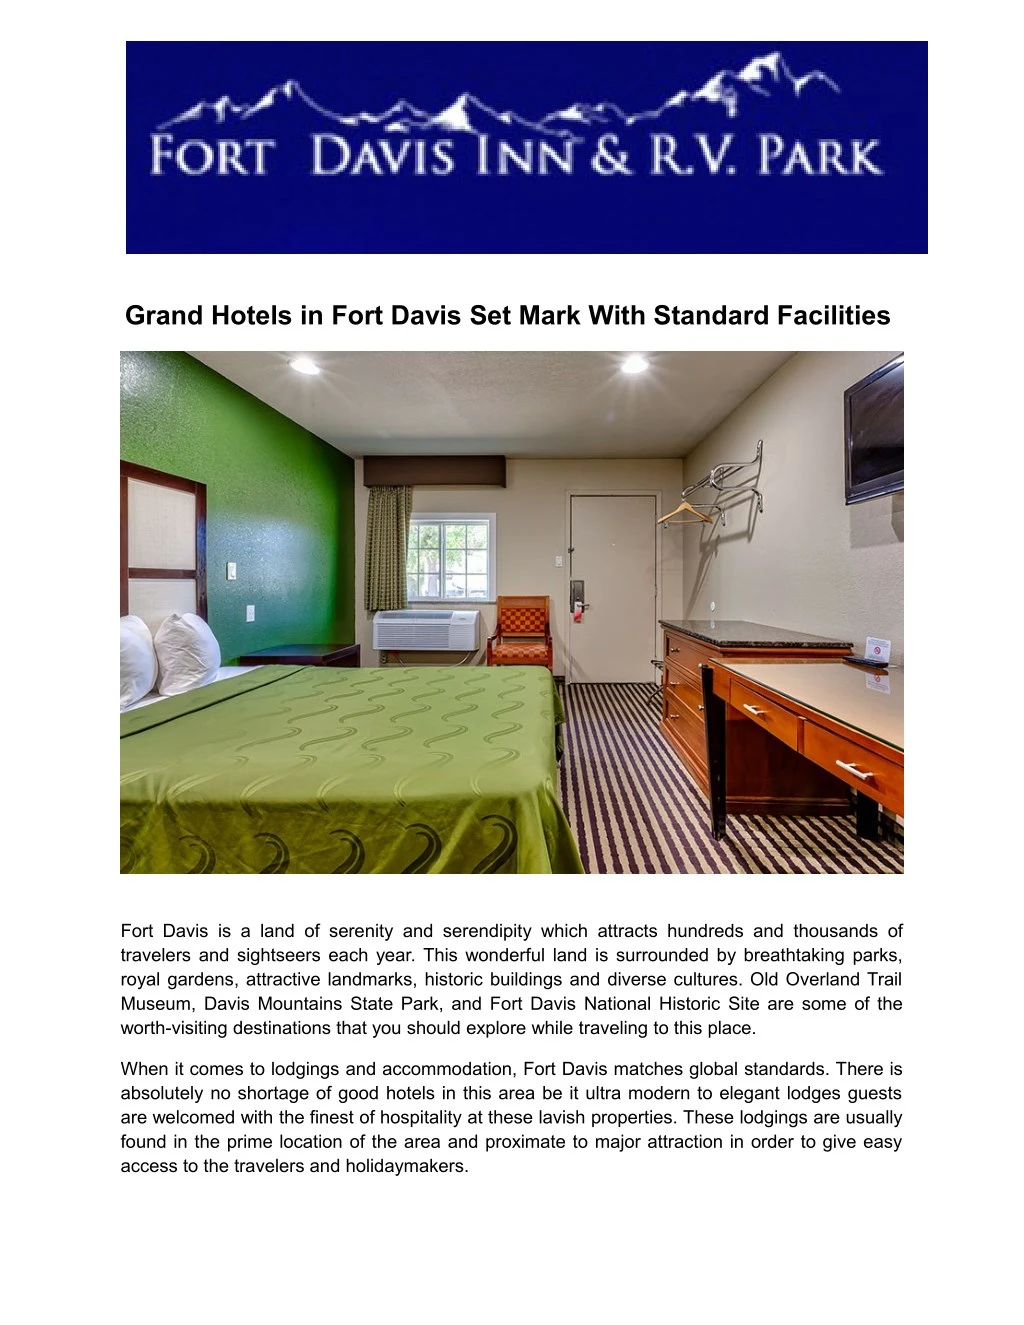 grand hotels in fort davis set mark with standard